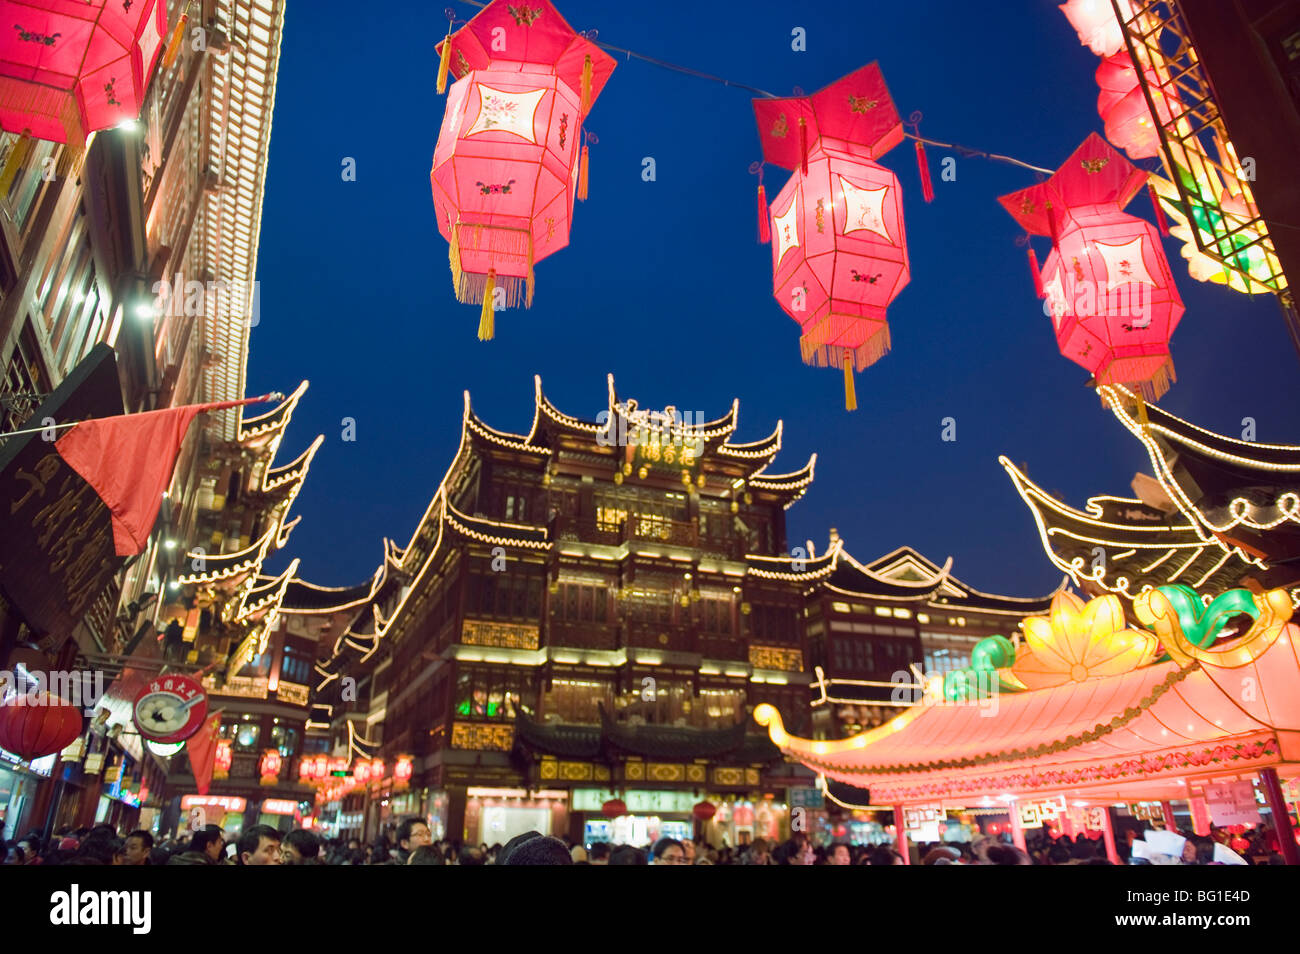 Chinese New Year decorations at Yuyuan Garden, Shanghai, China, Asia Stock Photo